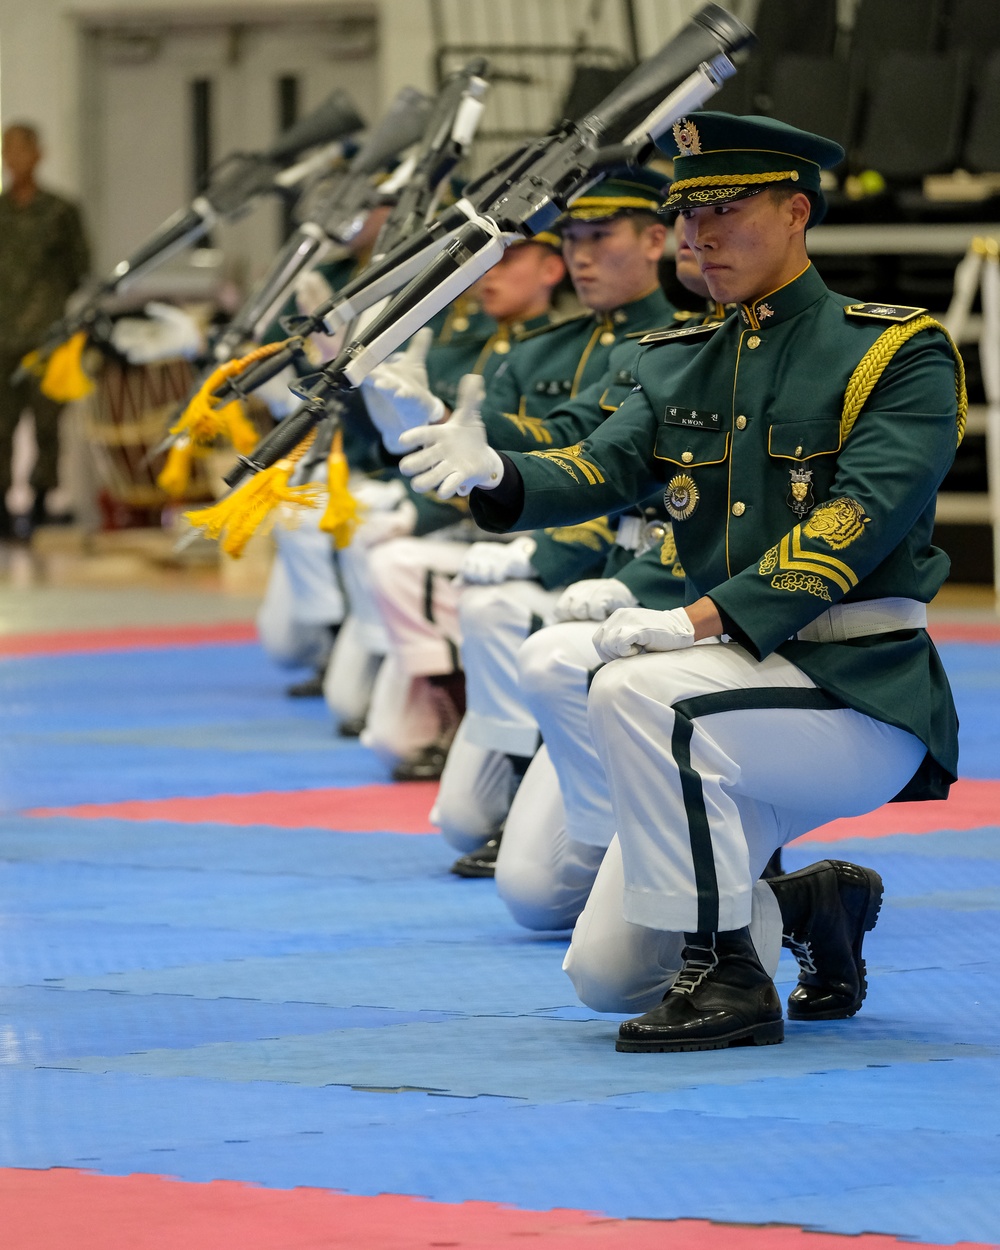 KATUSA-U.S. Soldier Friendship Week Closing Ceremony Brings Korean Culture to Life